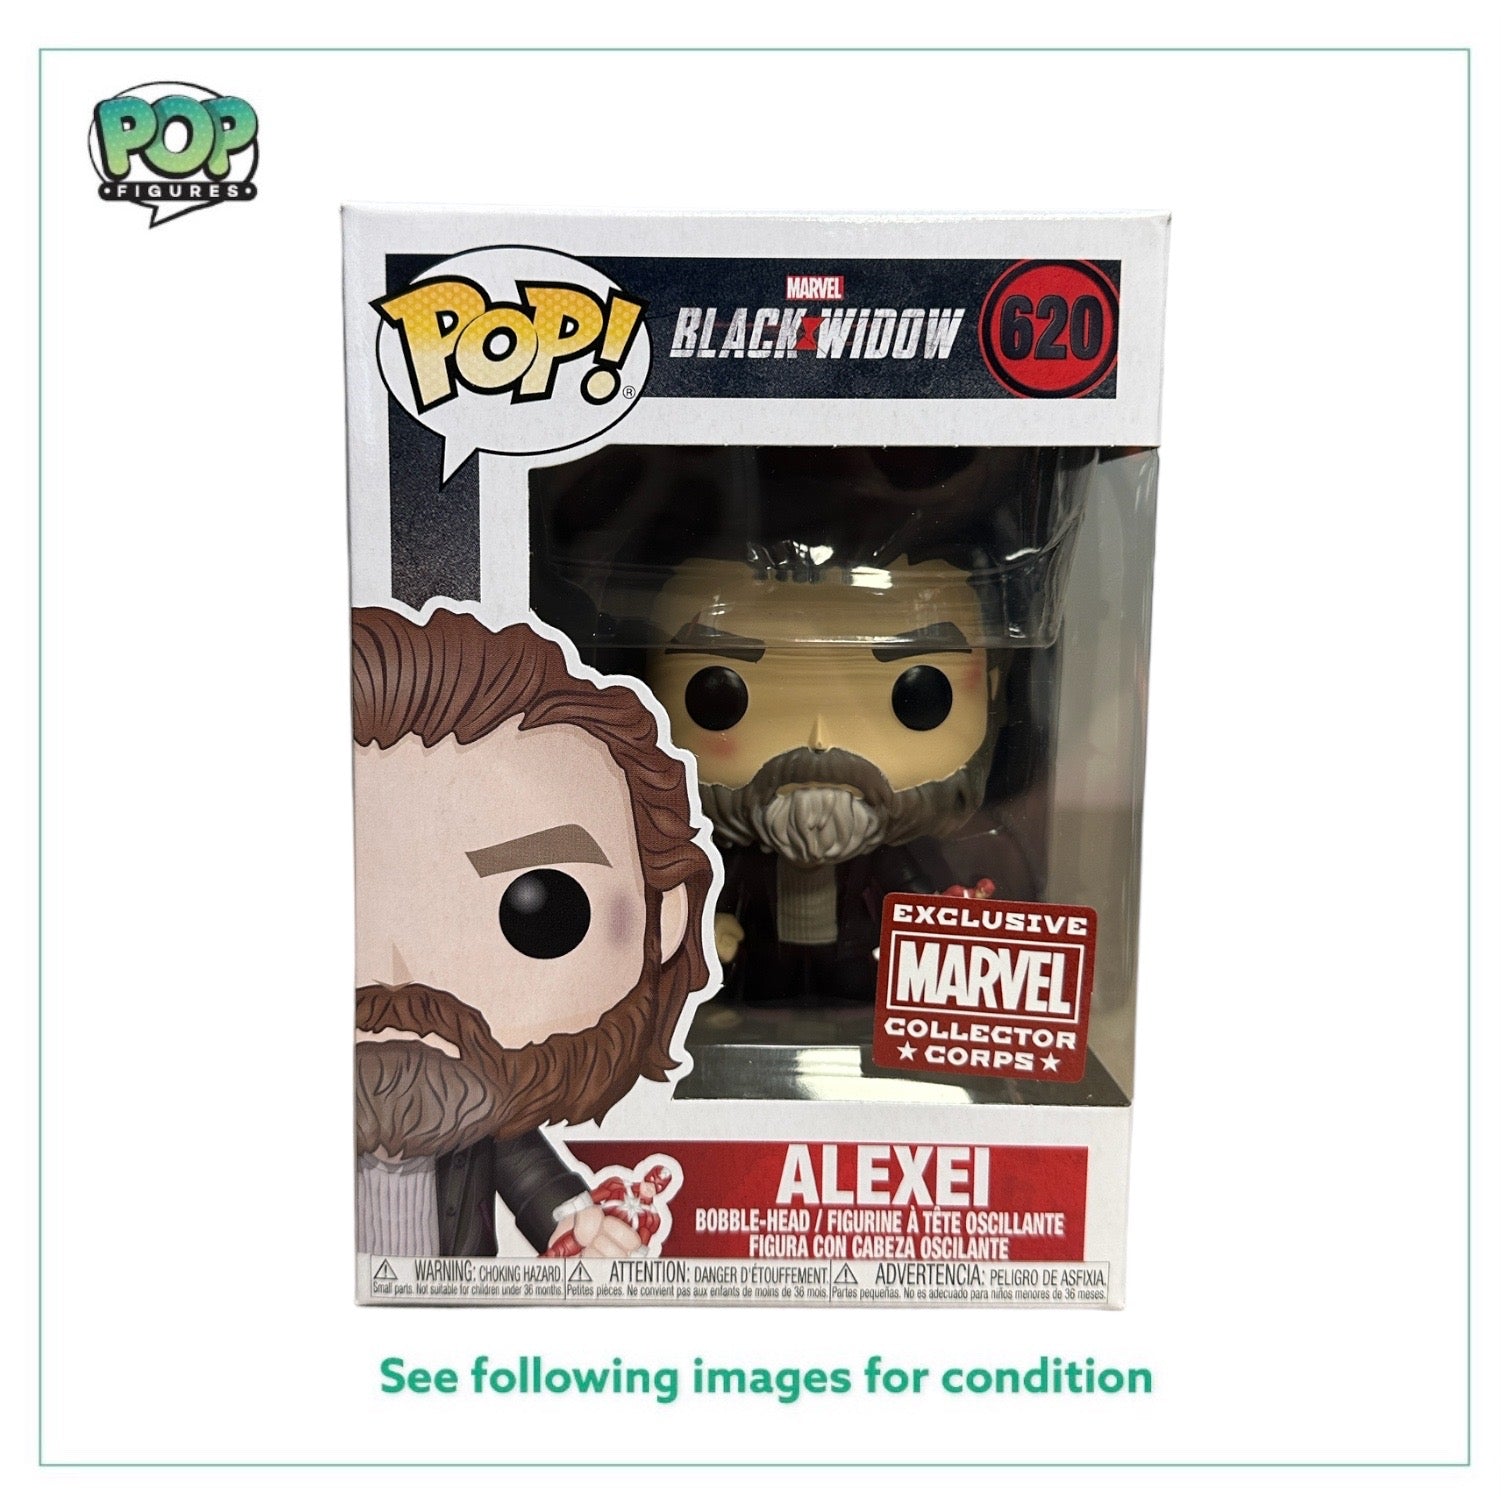 Alexei #620 Funko Pop! - Black Widow - Marvel Collector Corps Exclusive - Condition 9/10